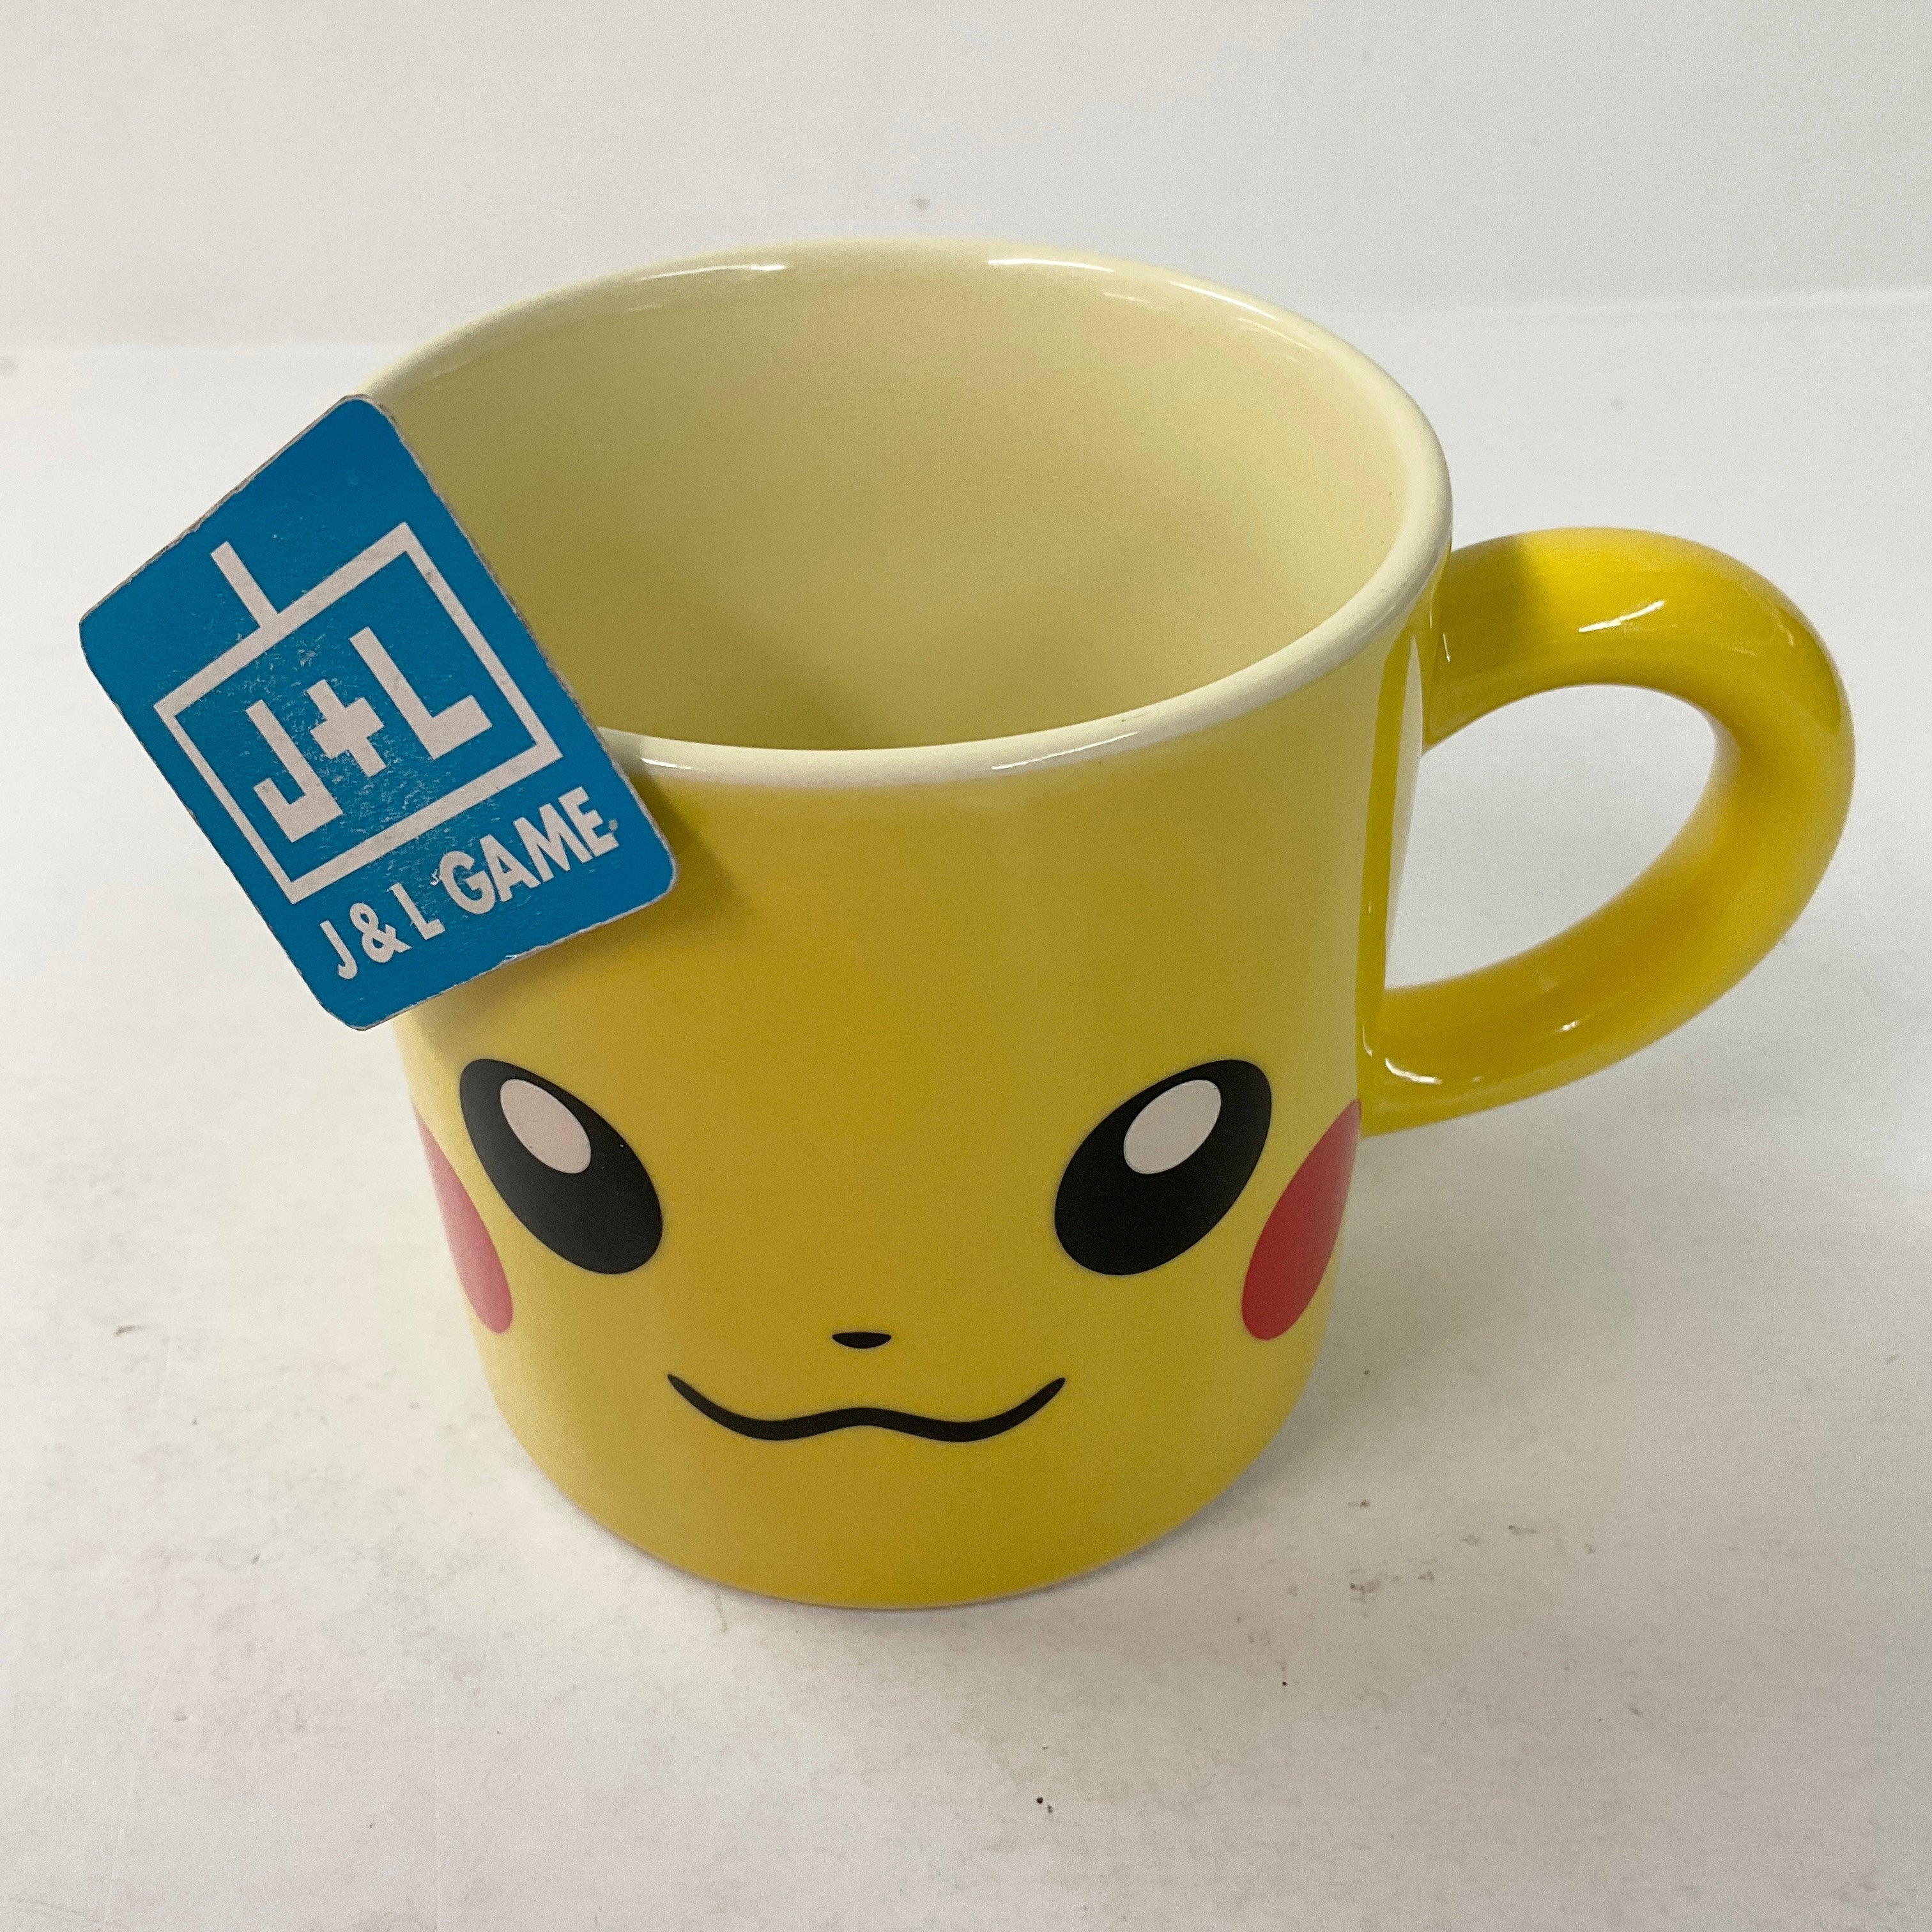 Pokemon Center Pikachu Mug - Toy (Japanese Import) Toy ポケモン(Pokemon)   